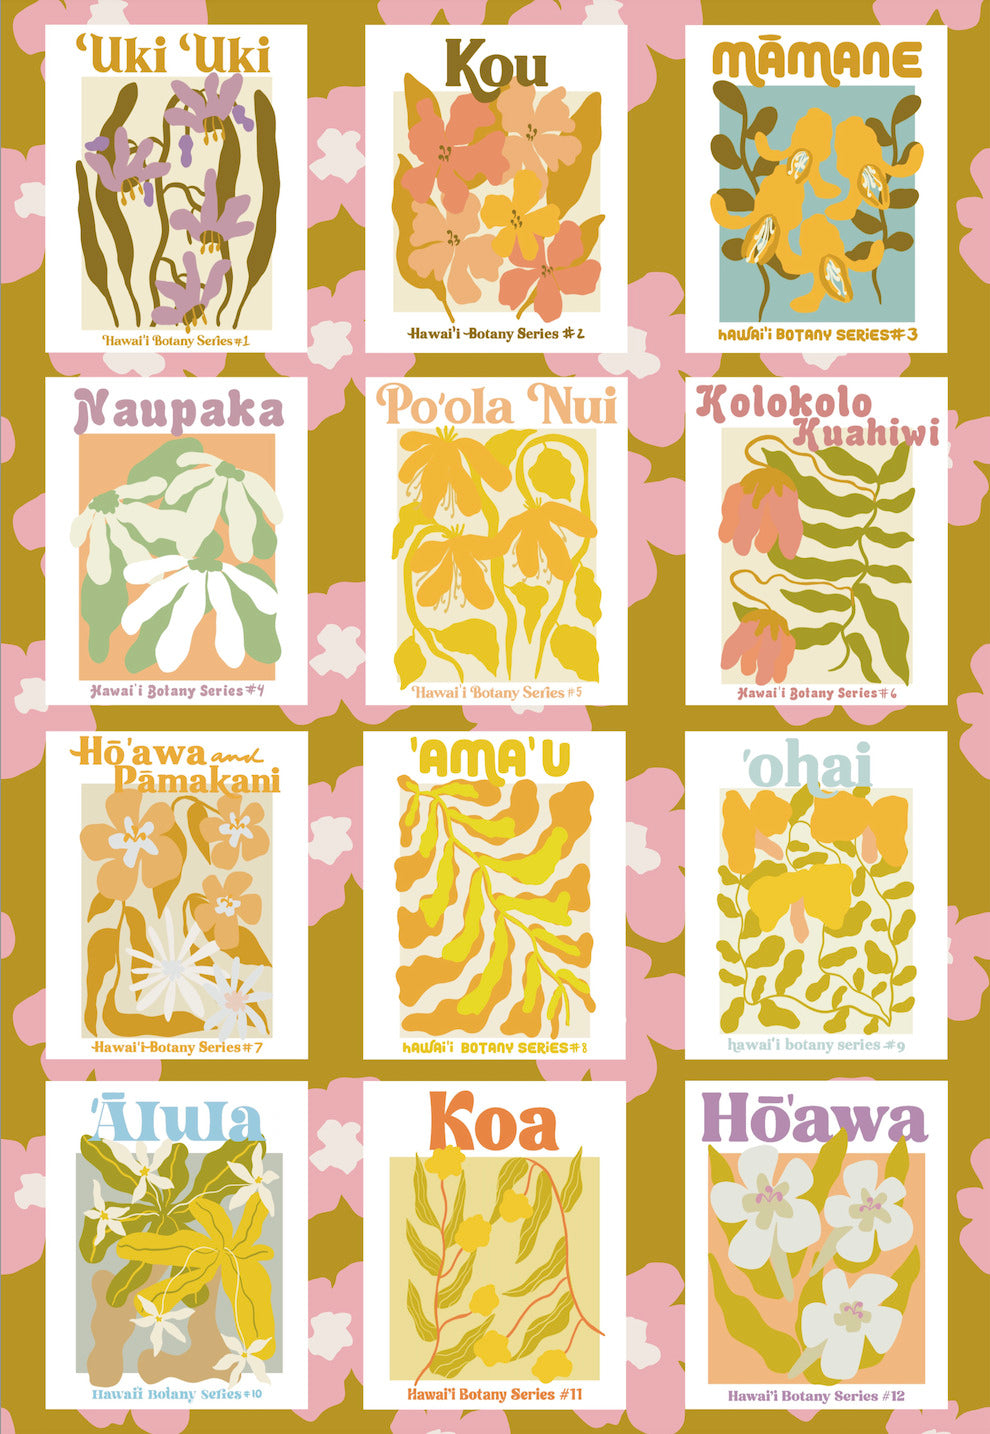 Pop-Up Mākeke - Surf Shack Puzzles - Hawai'i Botany Series - 1000 Piece Puzzle